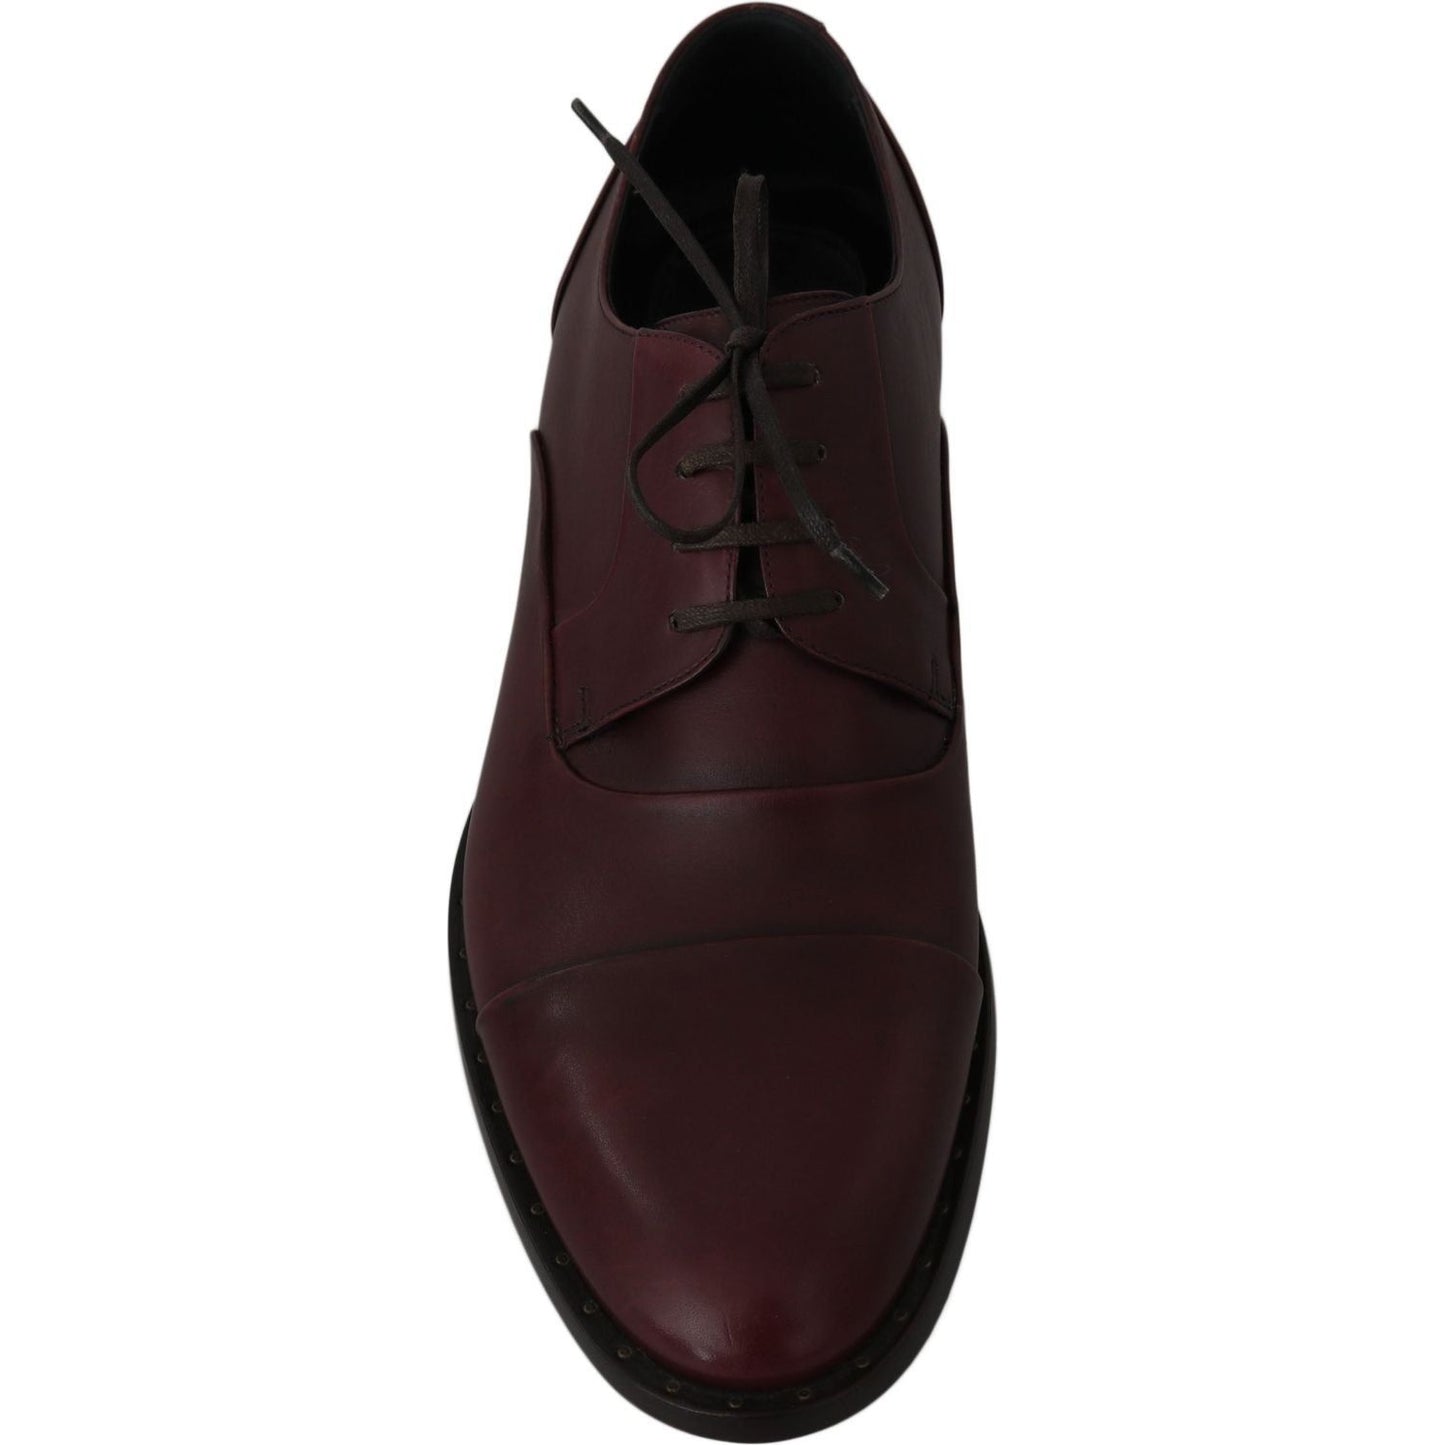 Dolce & Gabbana Elegant Bordeaux Leather Dress Shoes red-bordeaux-leather-derby-formal-shoes IMG_8398.jpg